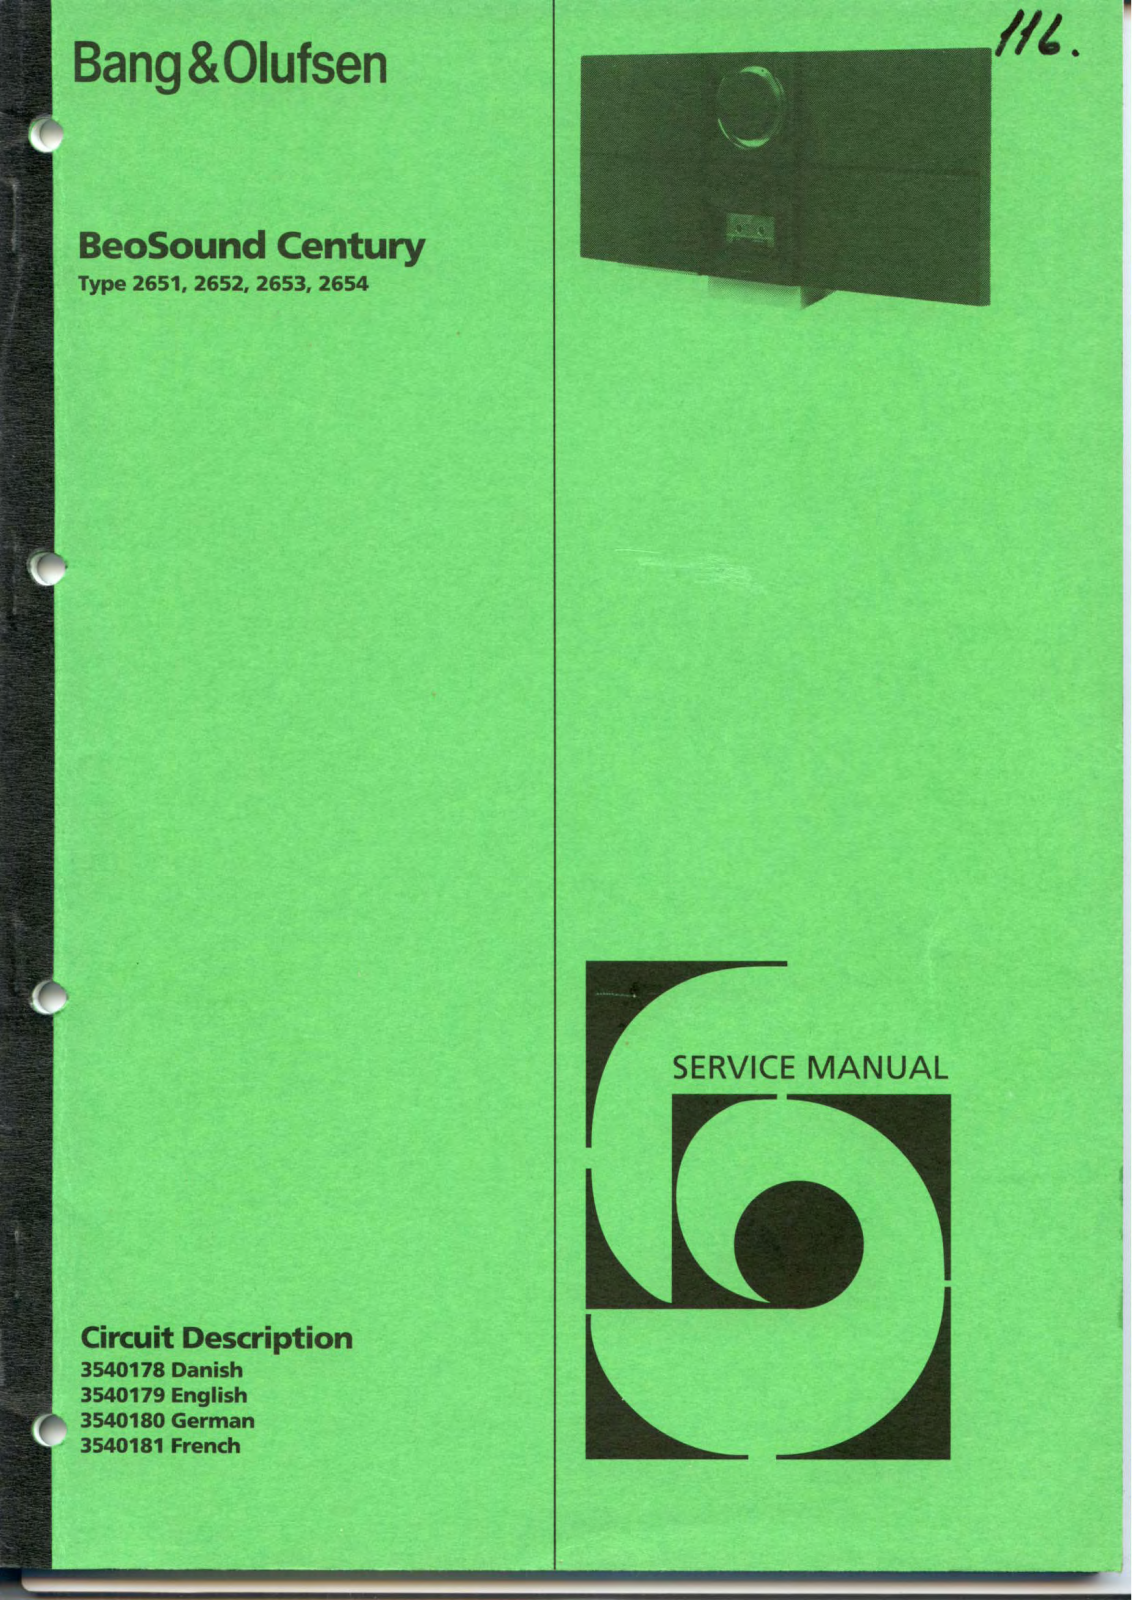 Bang Olufsen Beosound Century-SM, Beosound Century Service Manual